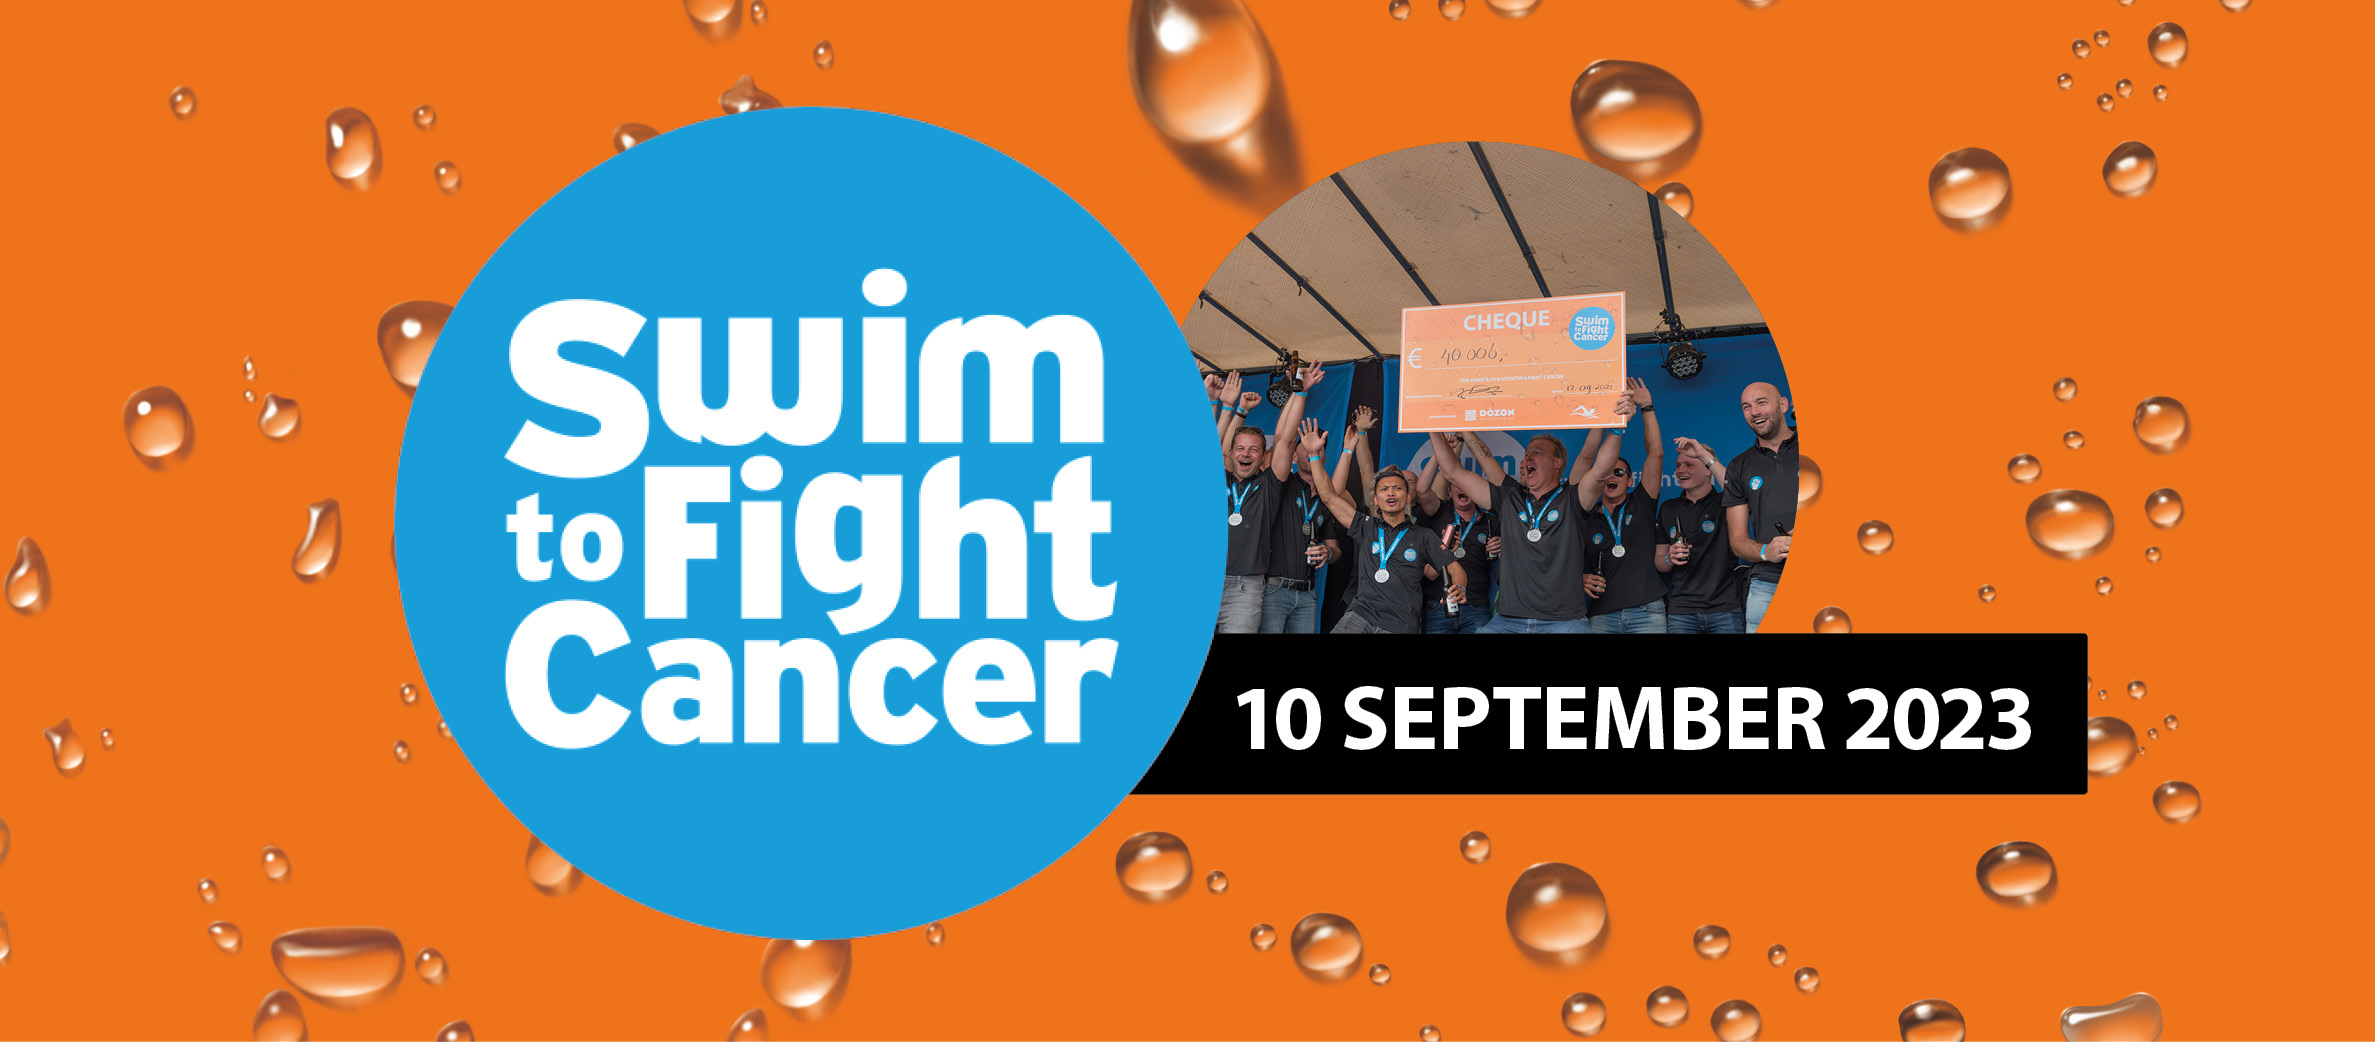 Swim to fight cancer 2023